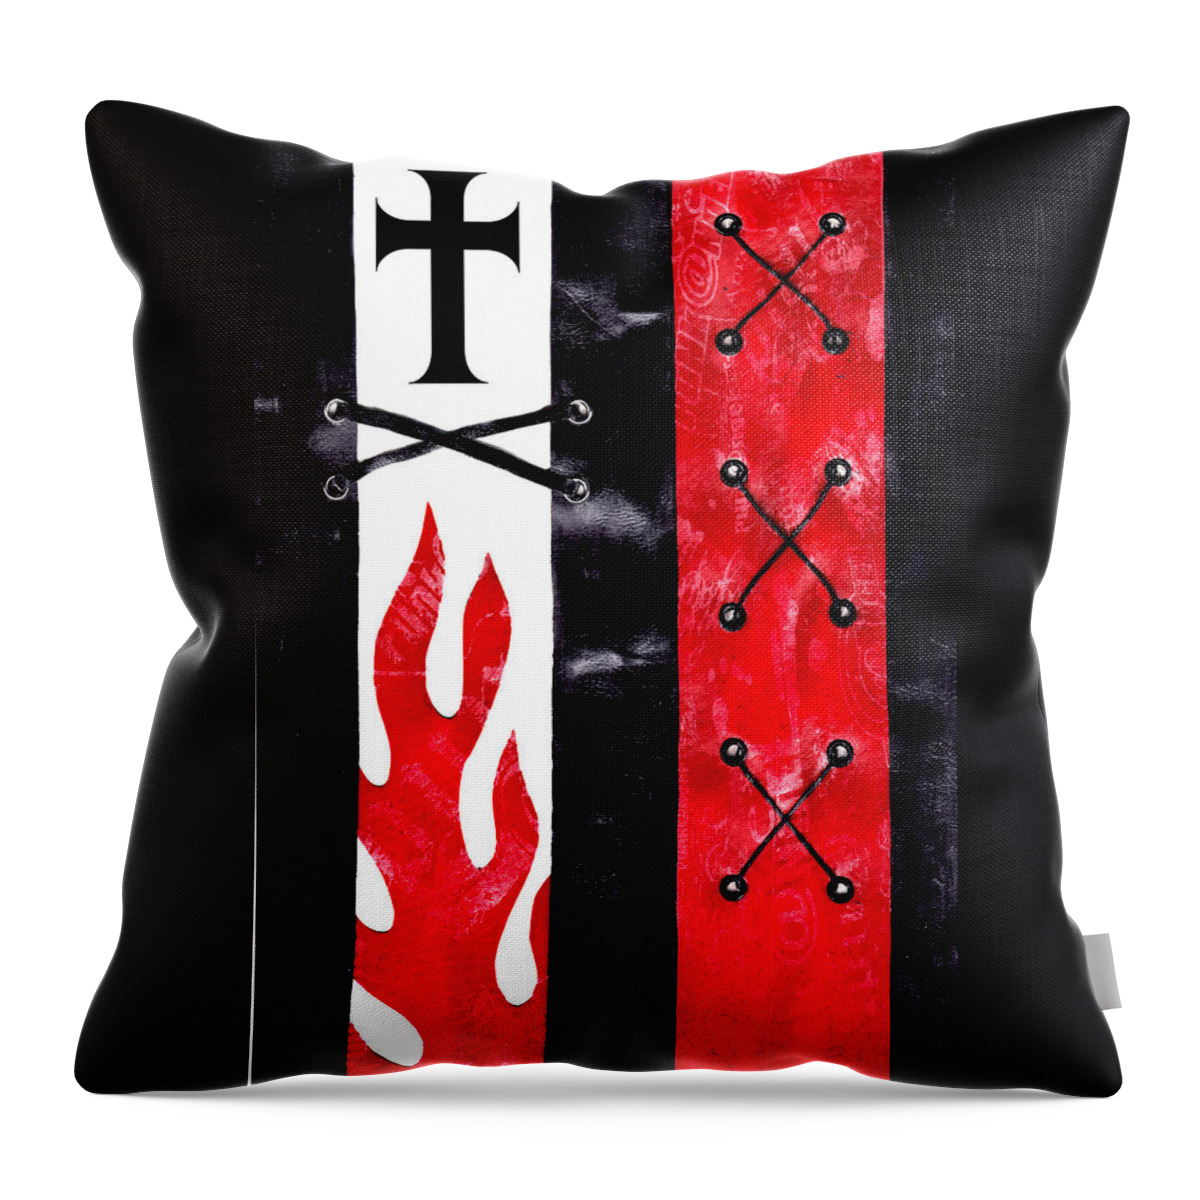 Goth Throw Pillow featuring the digital art Cross Over by Roseanne Jones